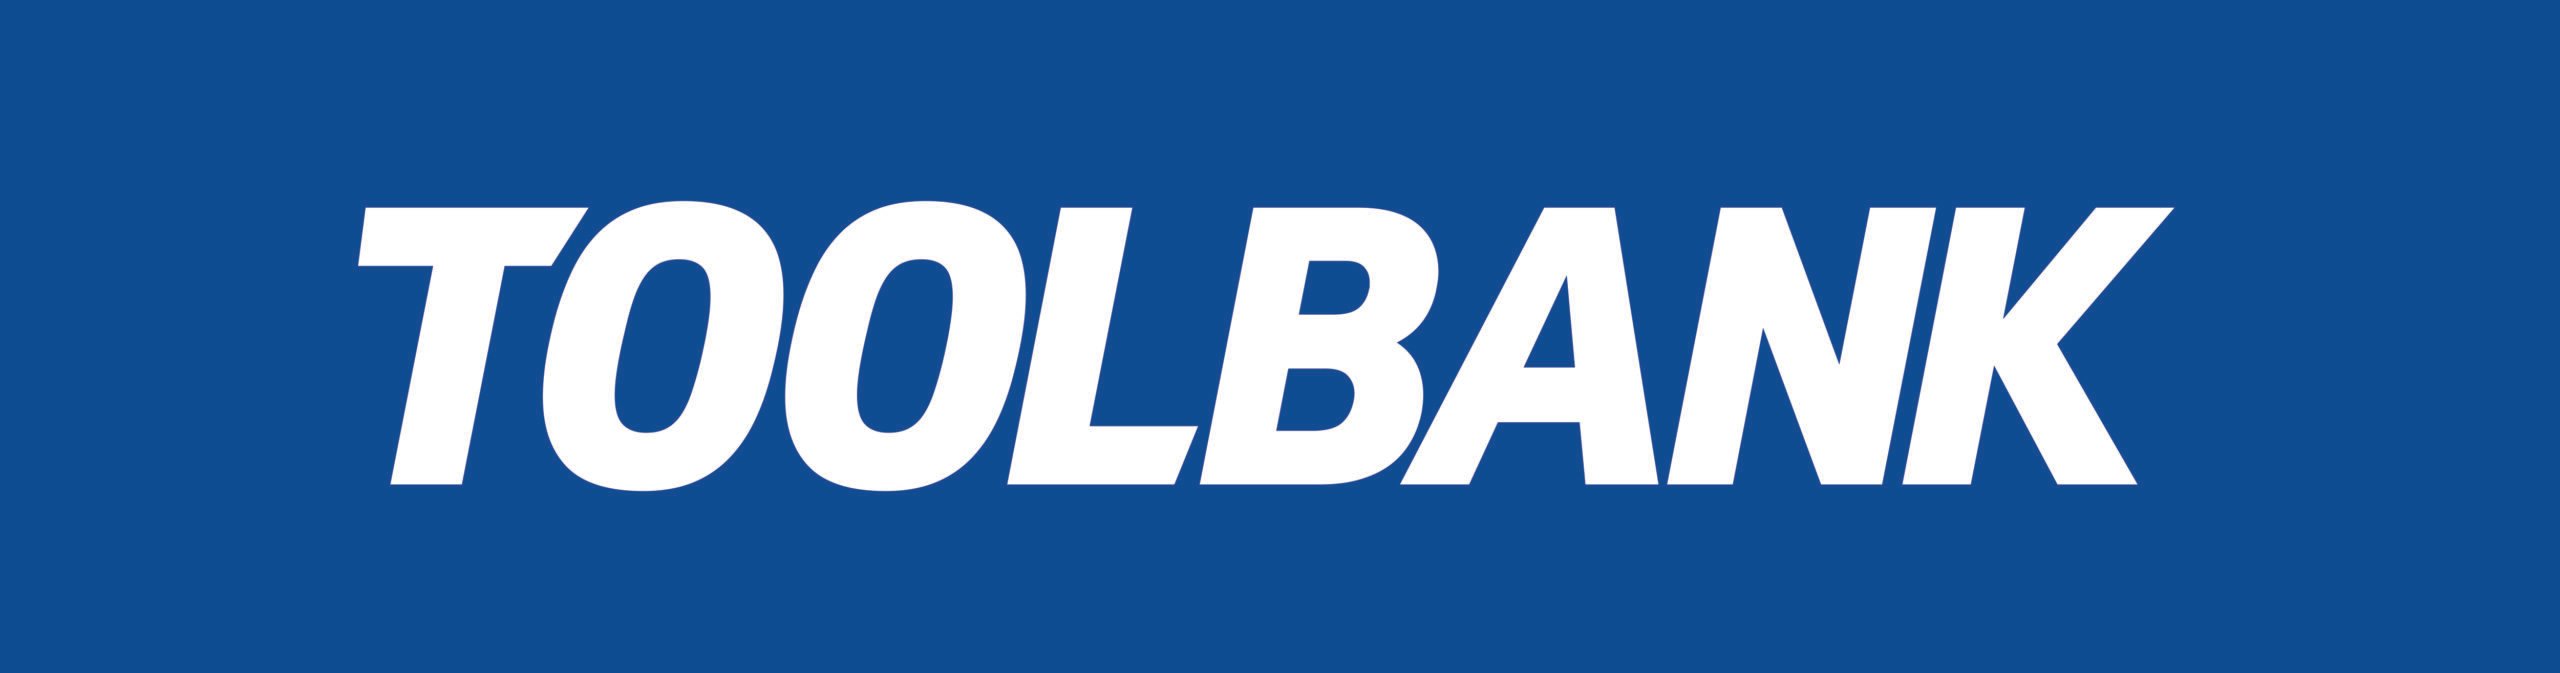 toolbank-cmyk-logo-inverted-jpg-scaled